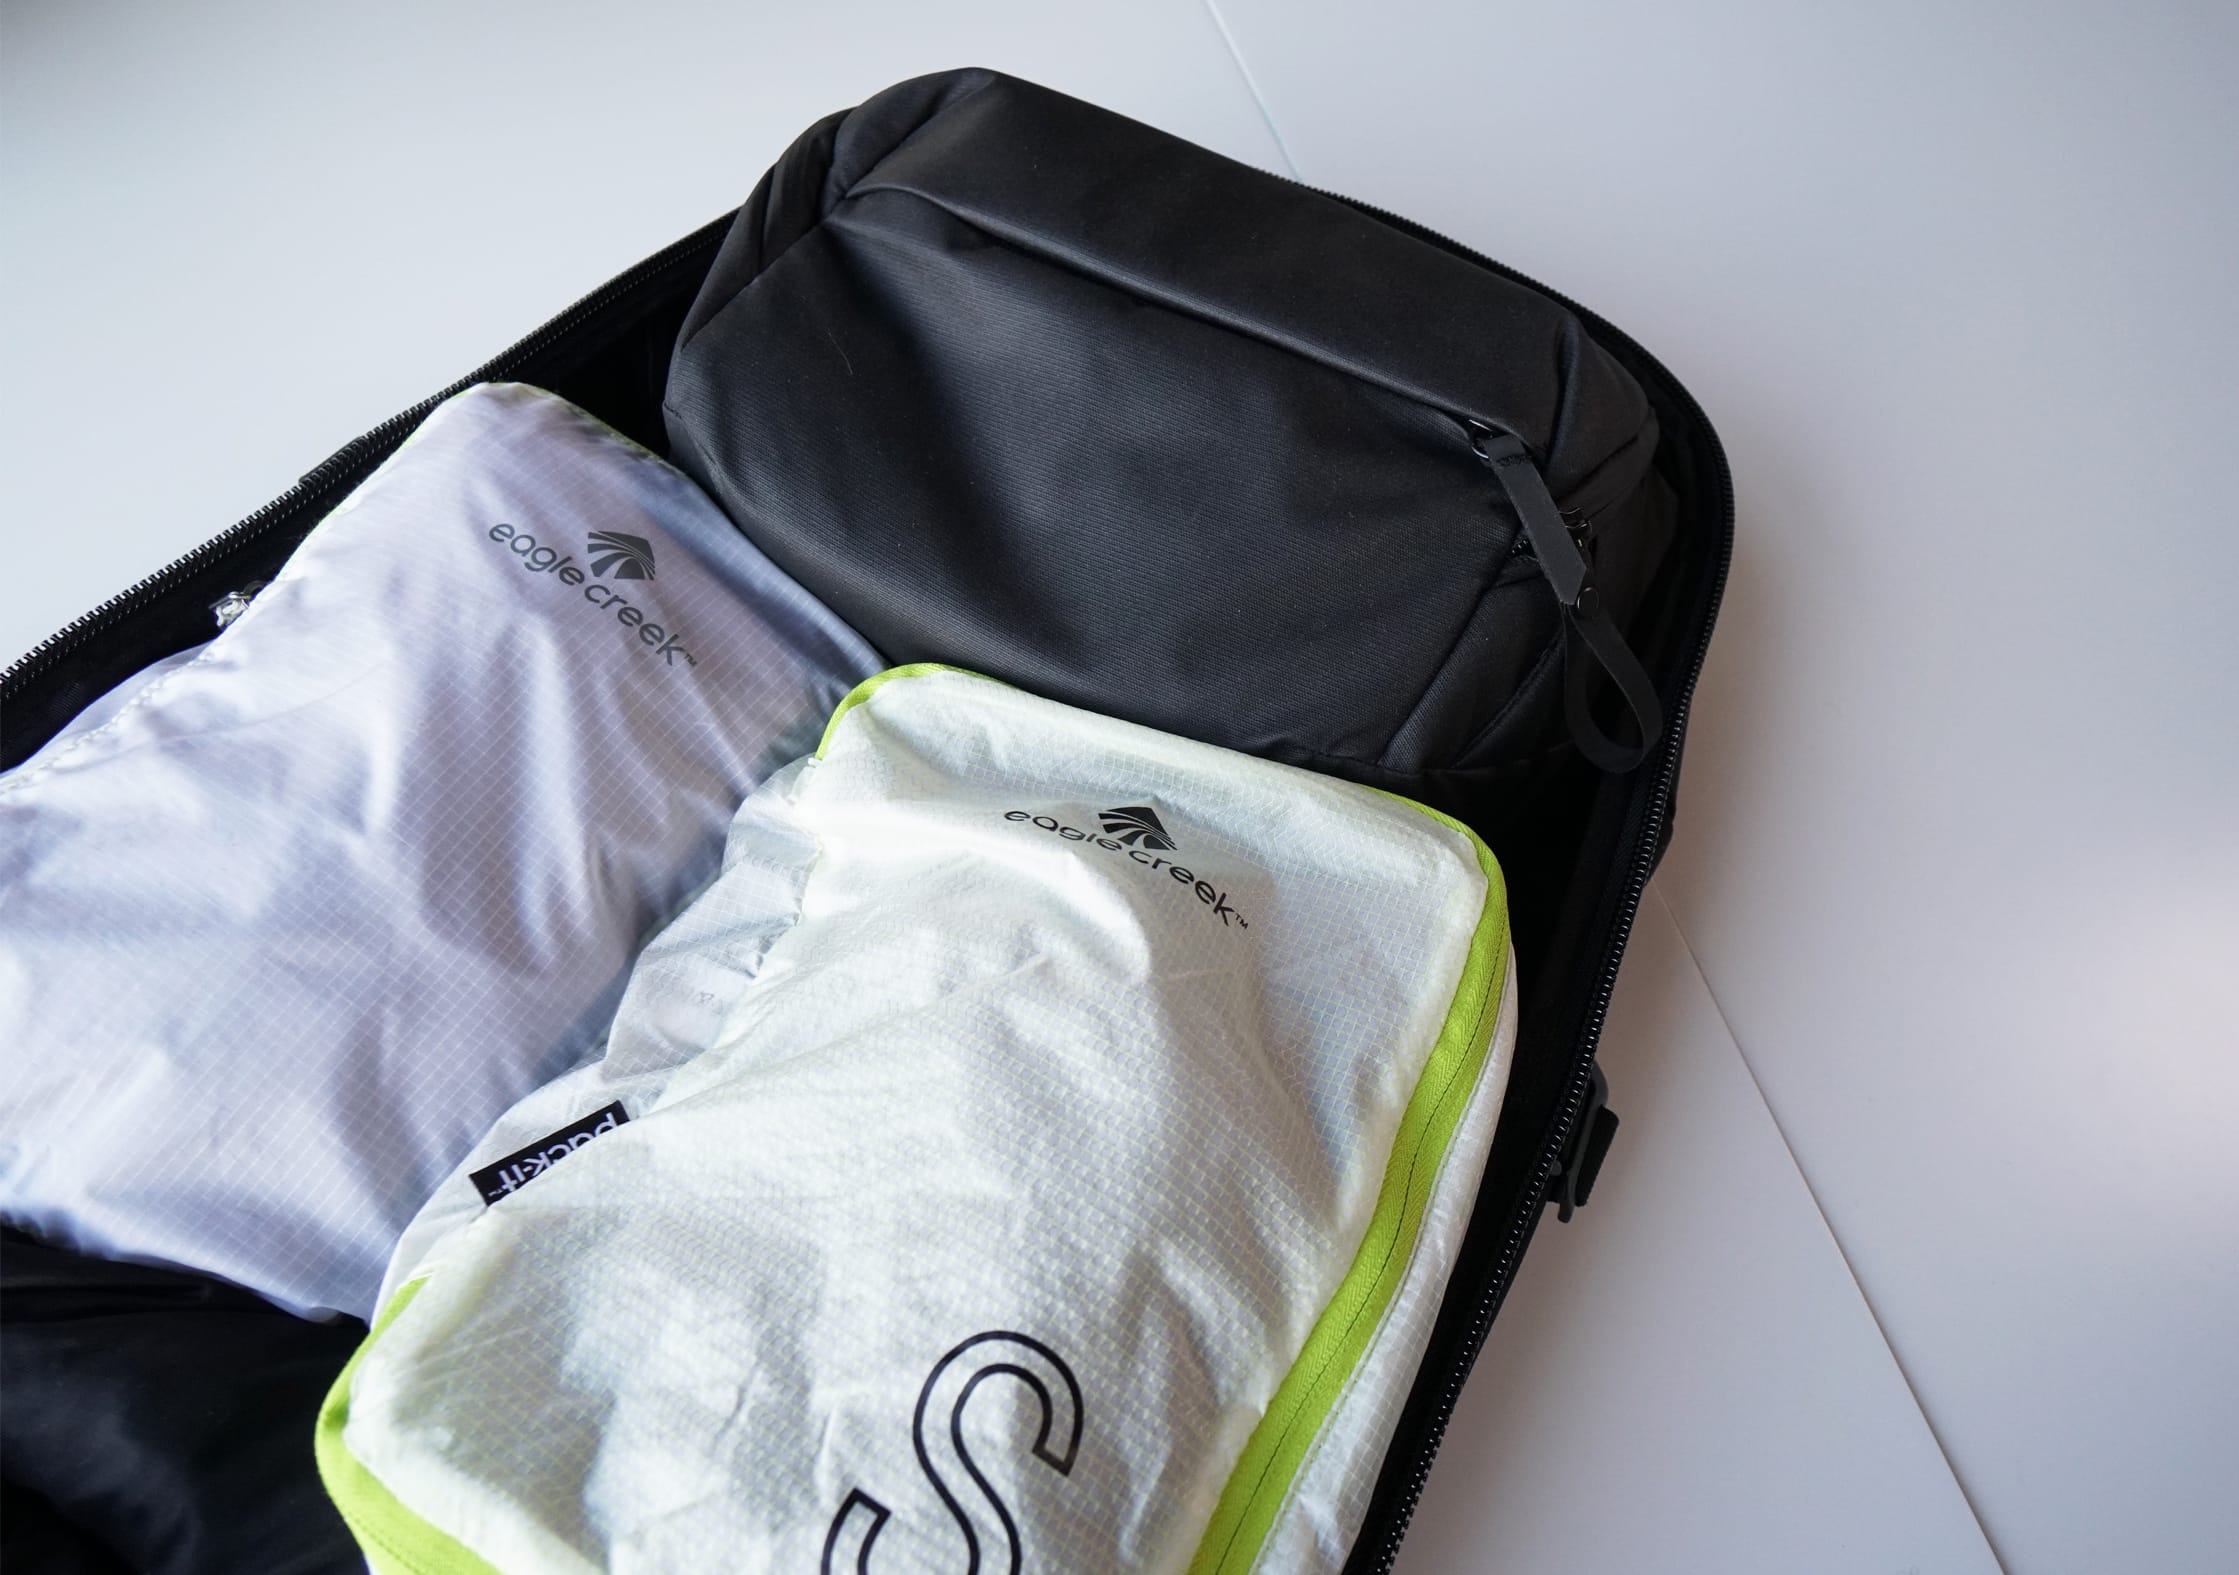 Peak Design Everyday Sling 5L Packed Inside Bag